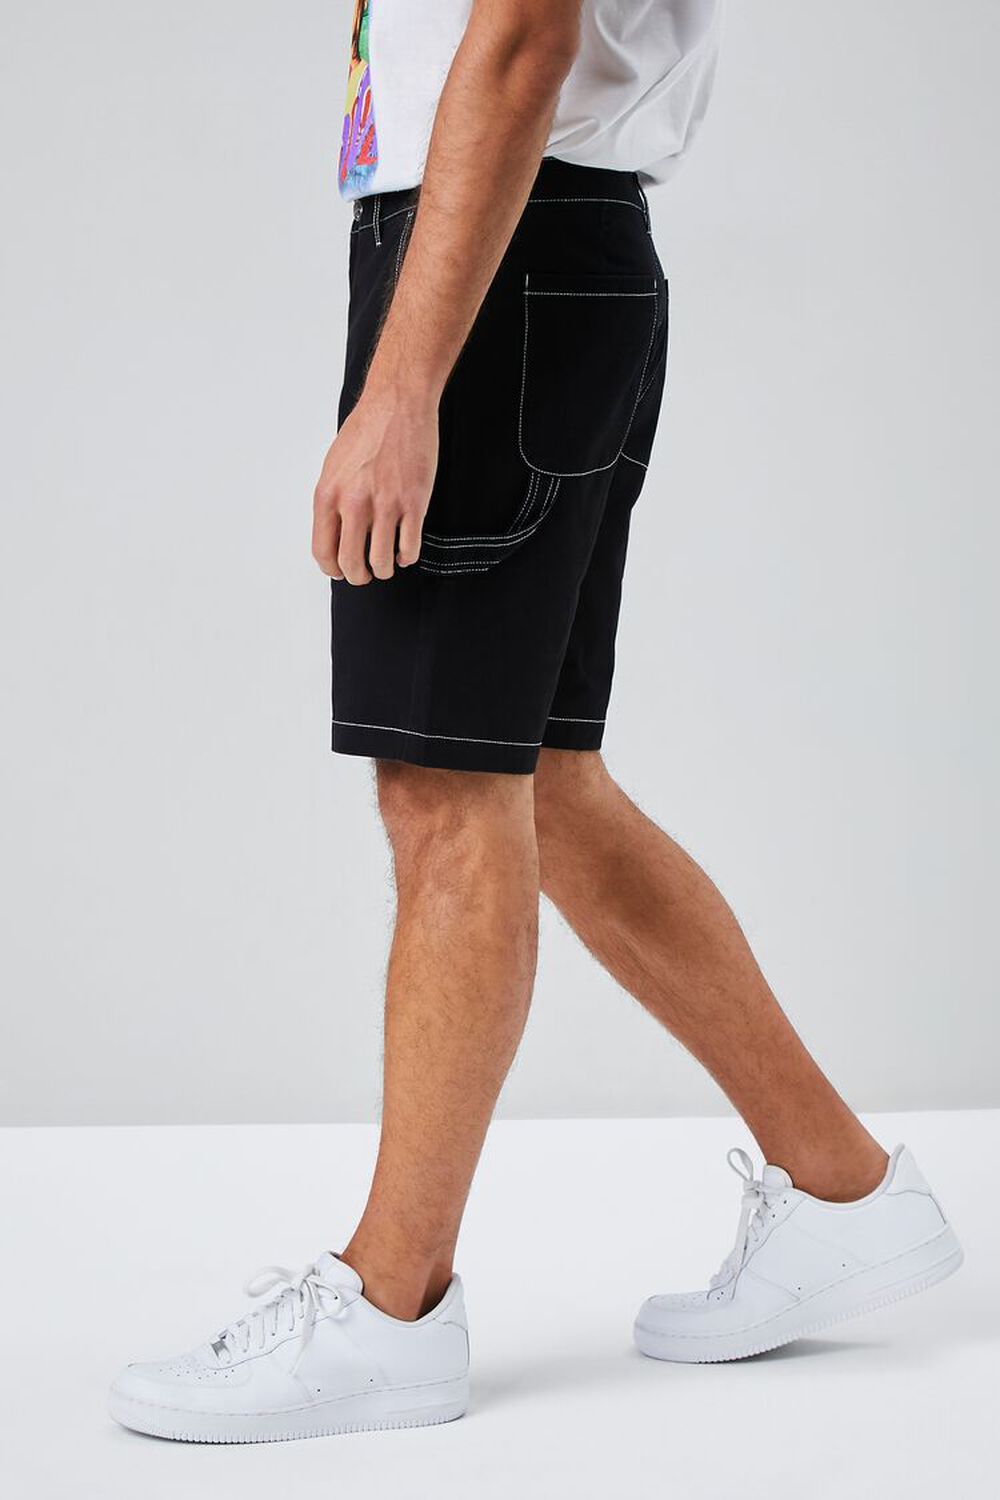 BLACK/WHITE Contrast-Stitch Utility Shorts, image 3